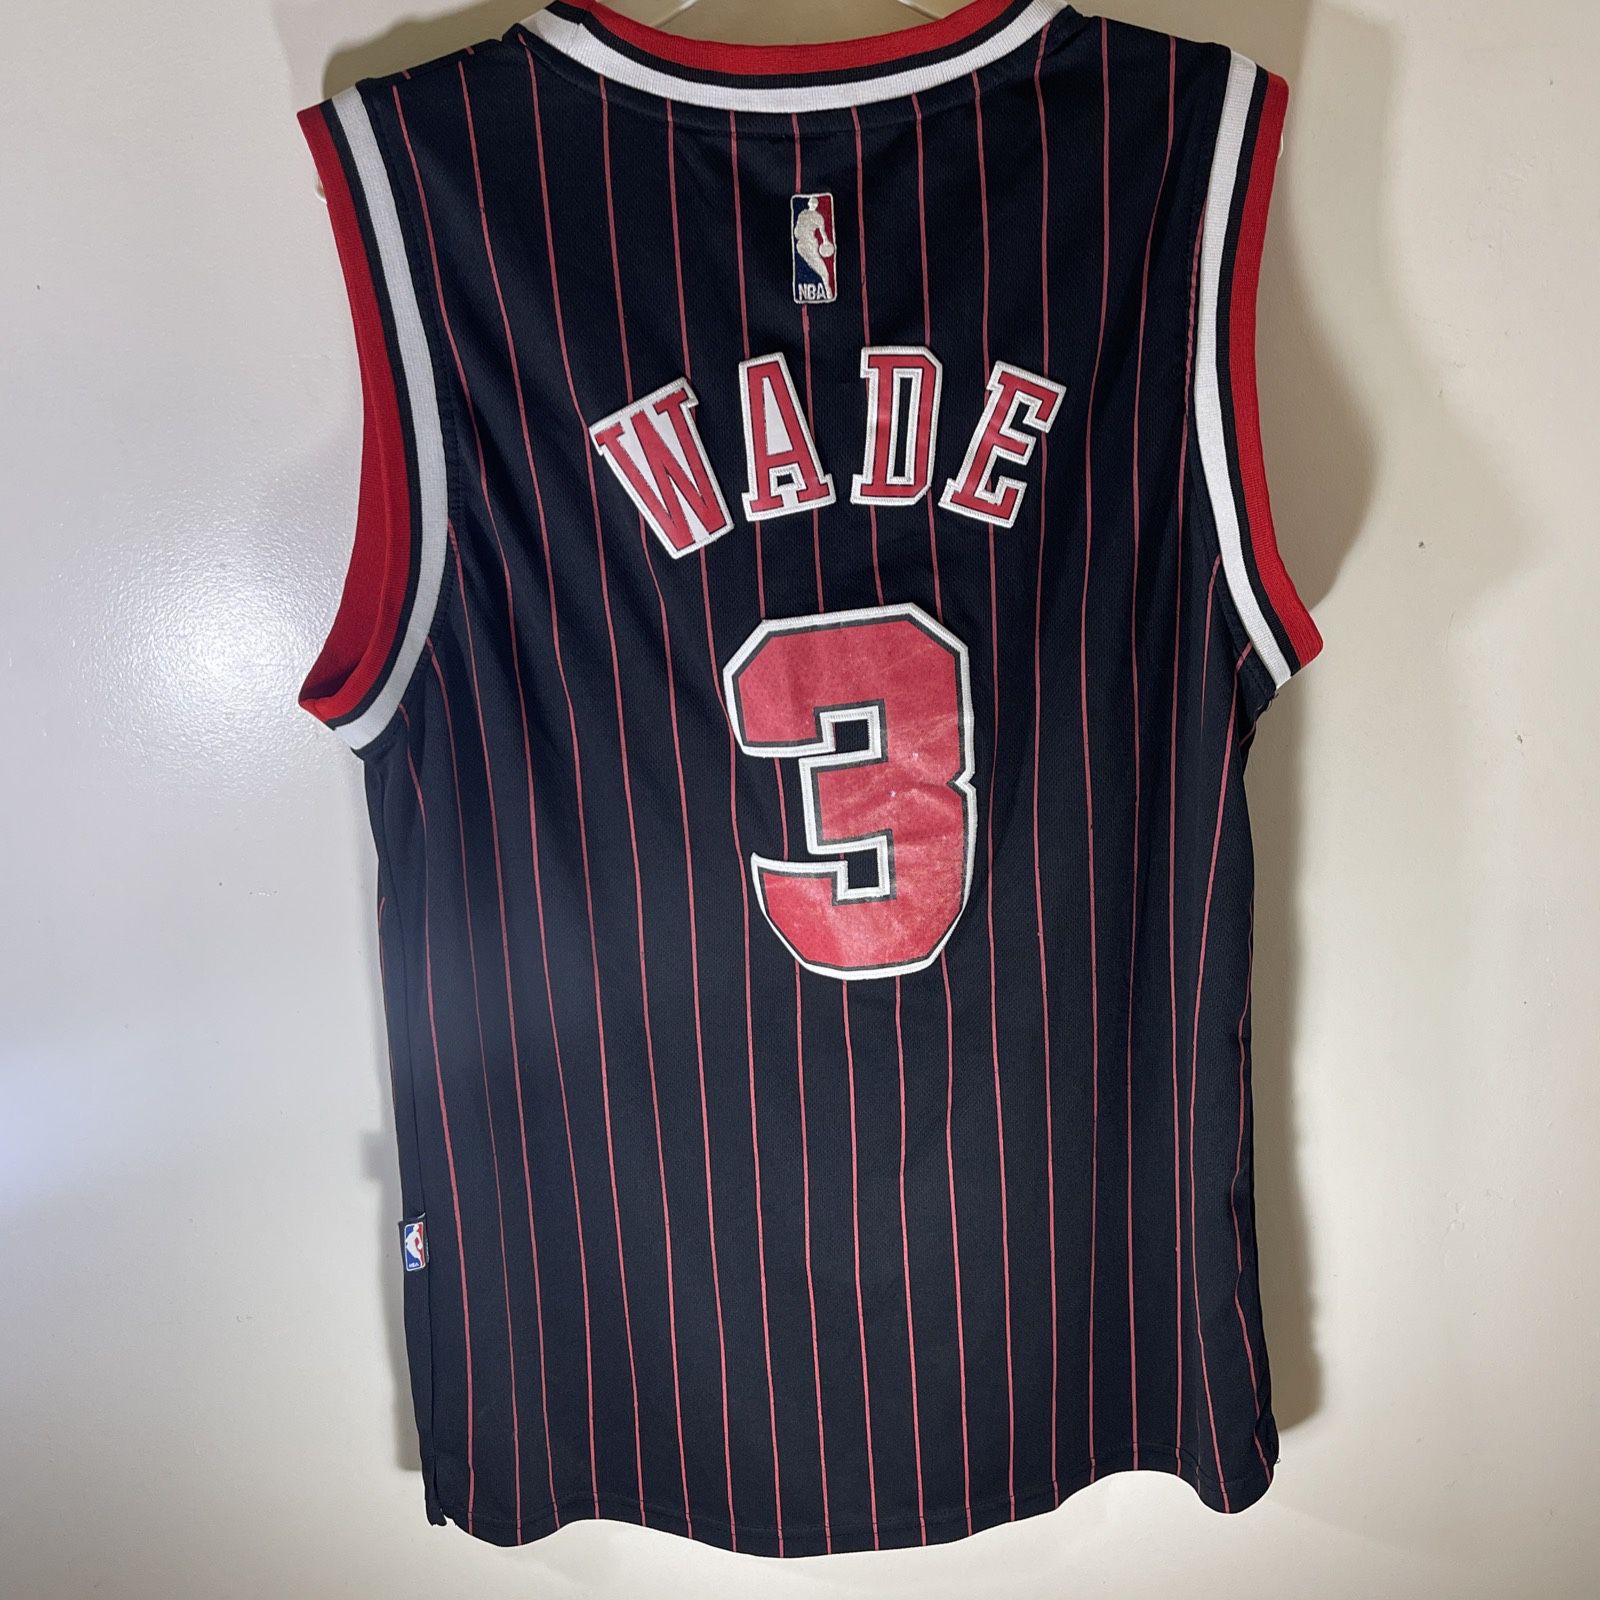 Dwayne Wade #3 Adidas Large Chicago Bulls NBA Jersey for Sale in Mesa, AZ -  OfferUp